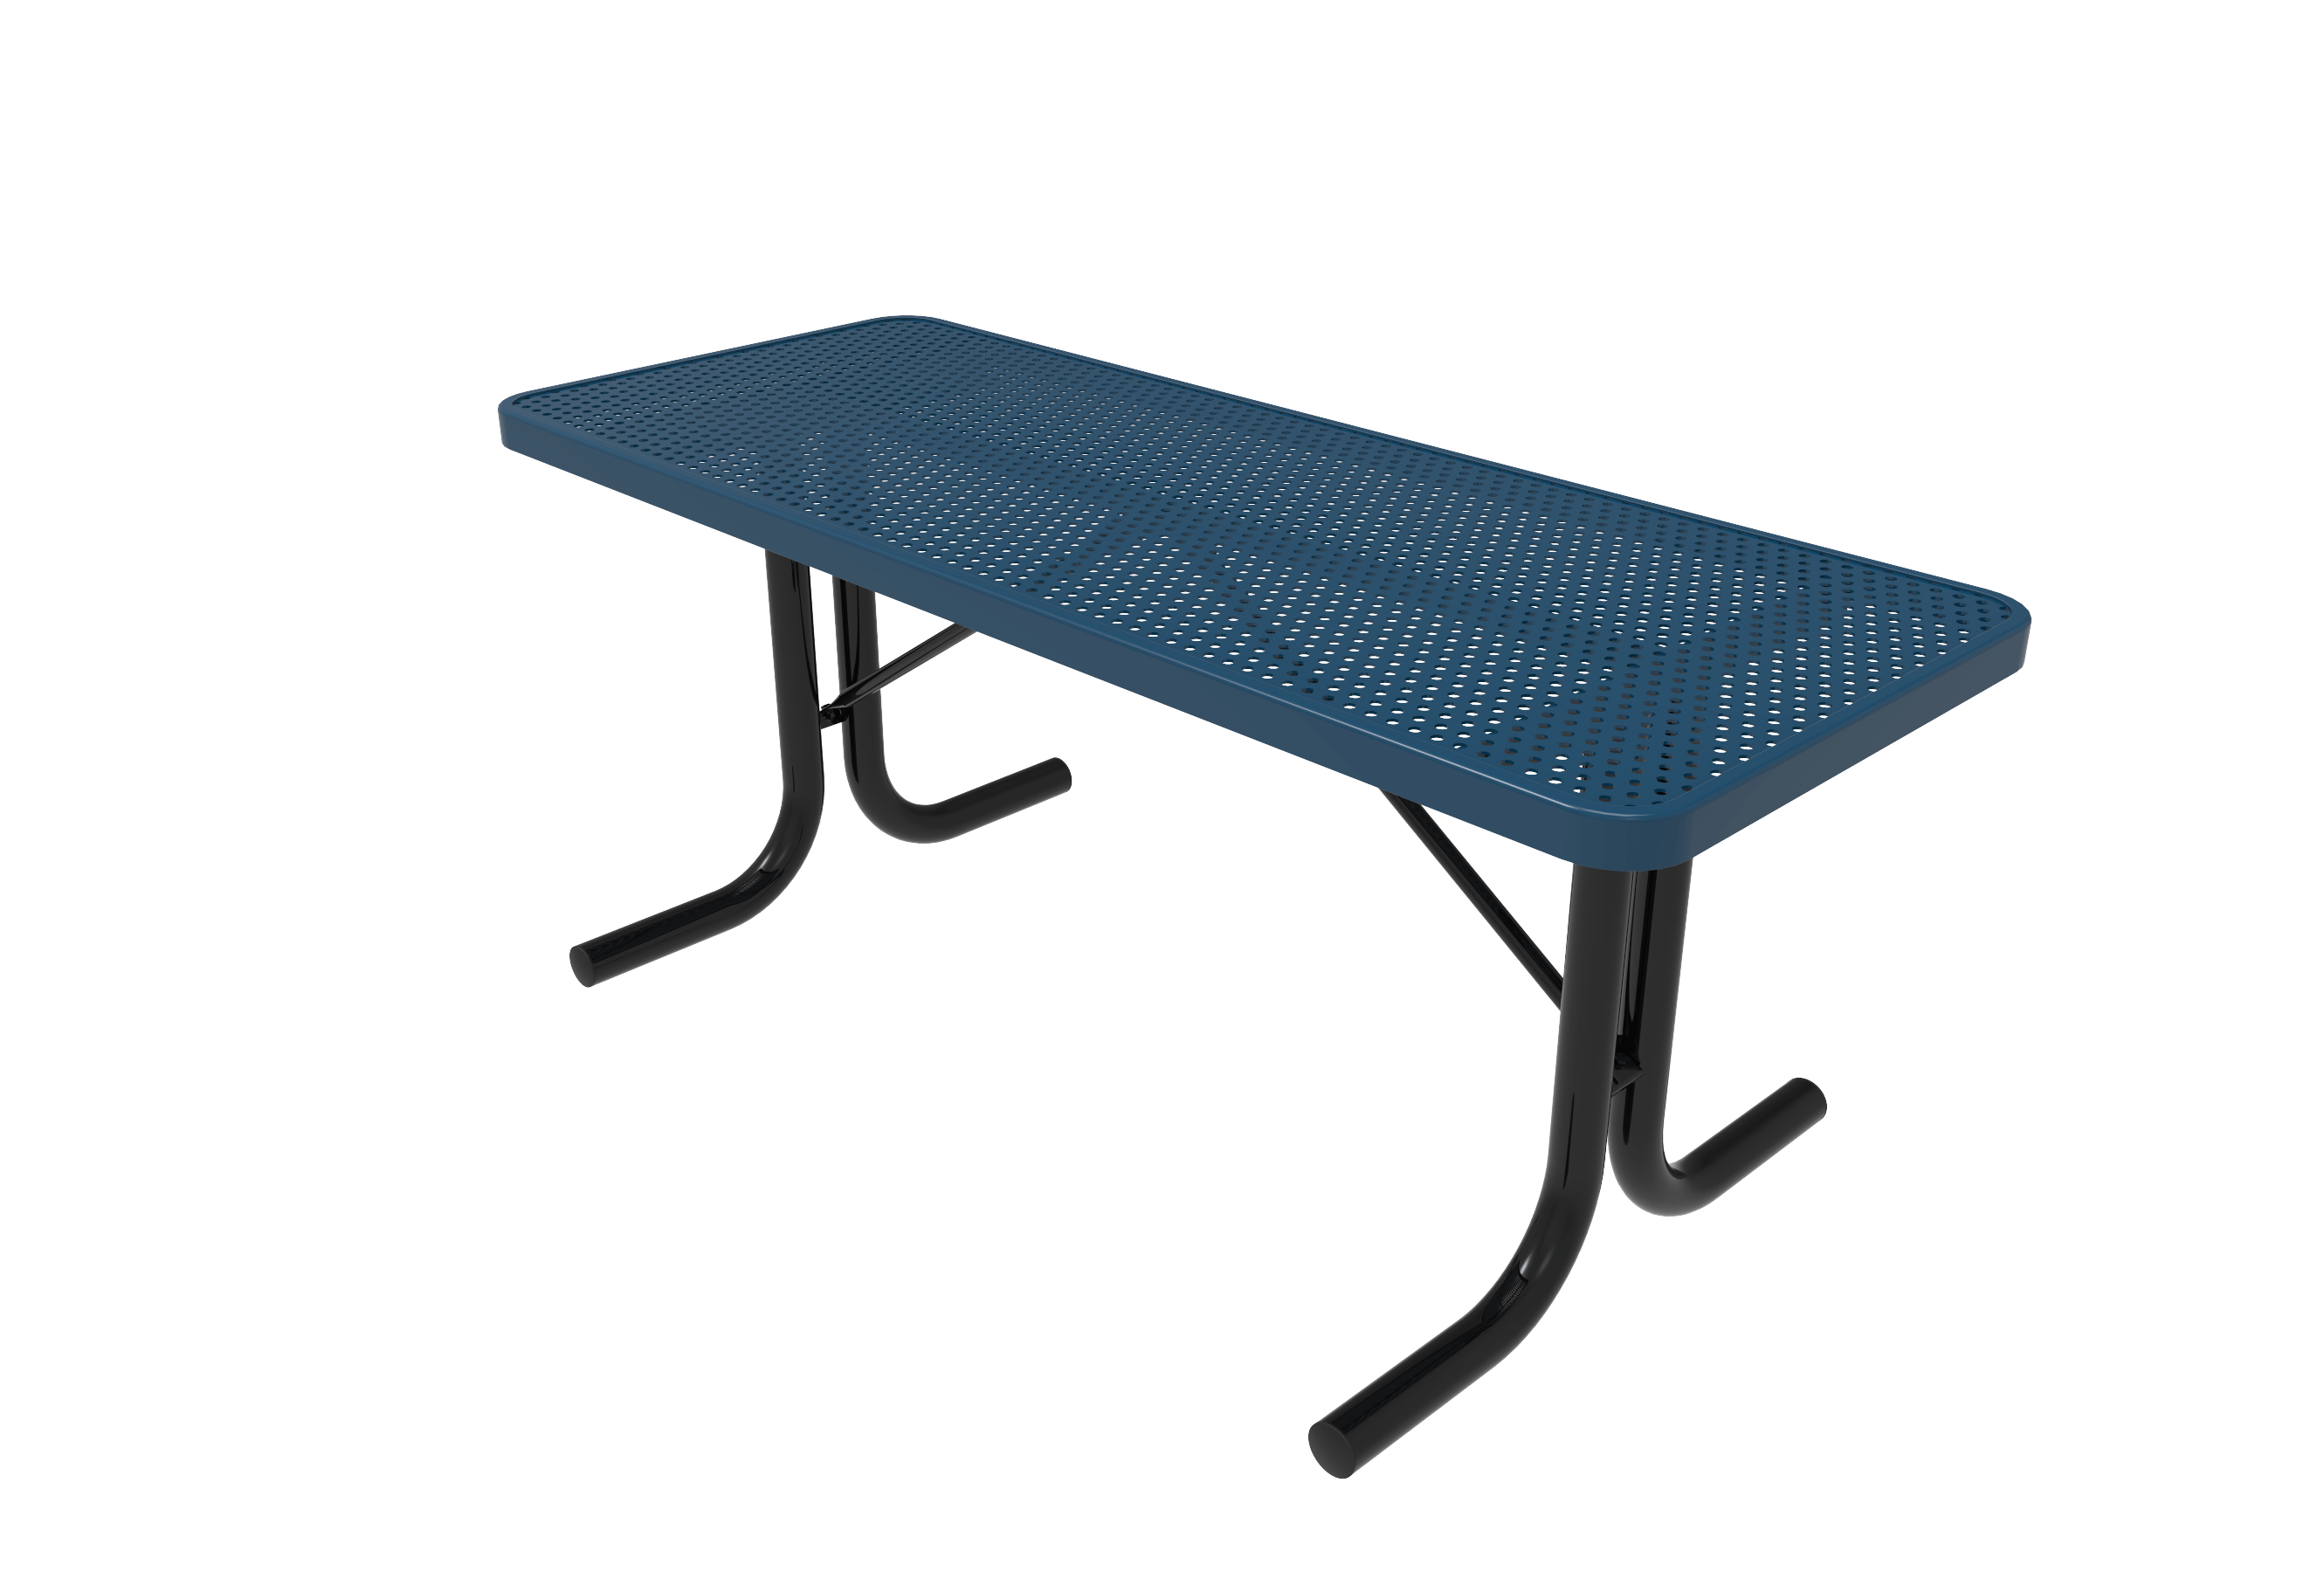 6′ Utility Table-Punched
TRT06-D-03-000
Industry Standard Finish
$659.00
TRT06-B-03-000
Advantage Premium Finish
$909.00
